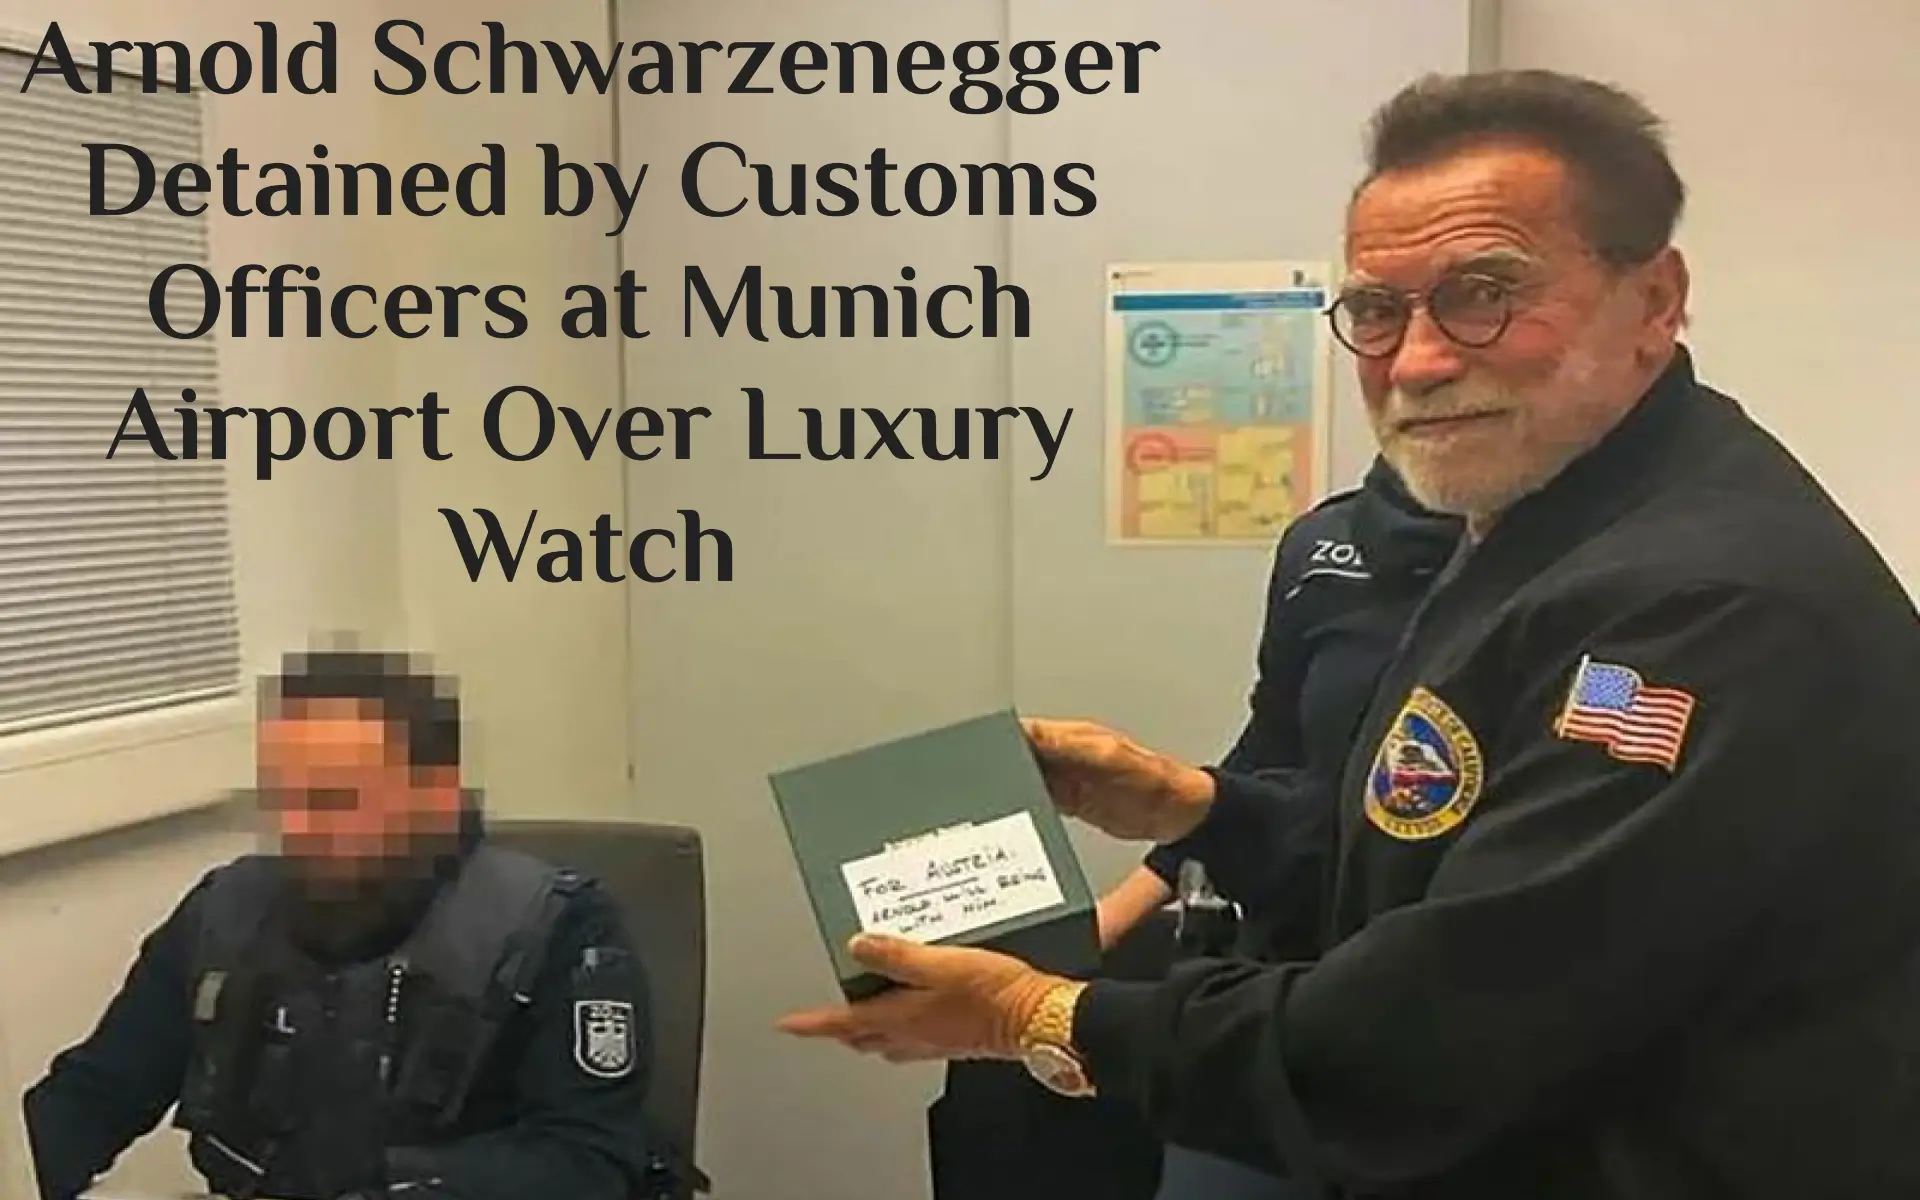 Arnold Schwarzenegger detained at Munich Airport for Luxury Watch